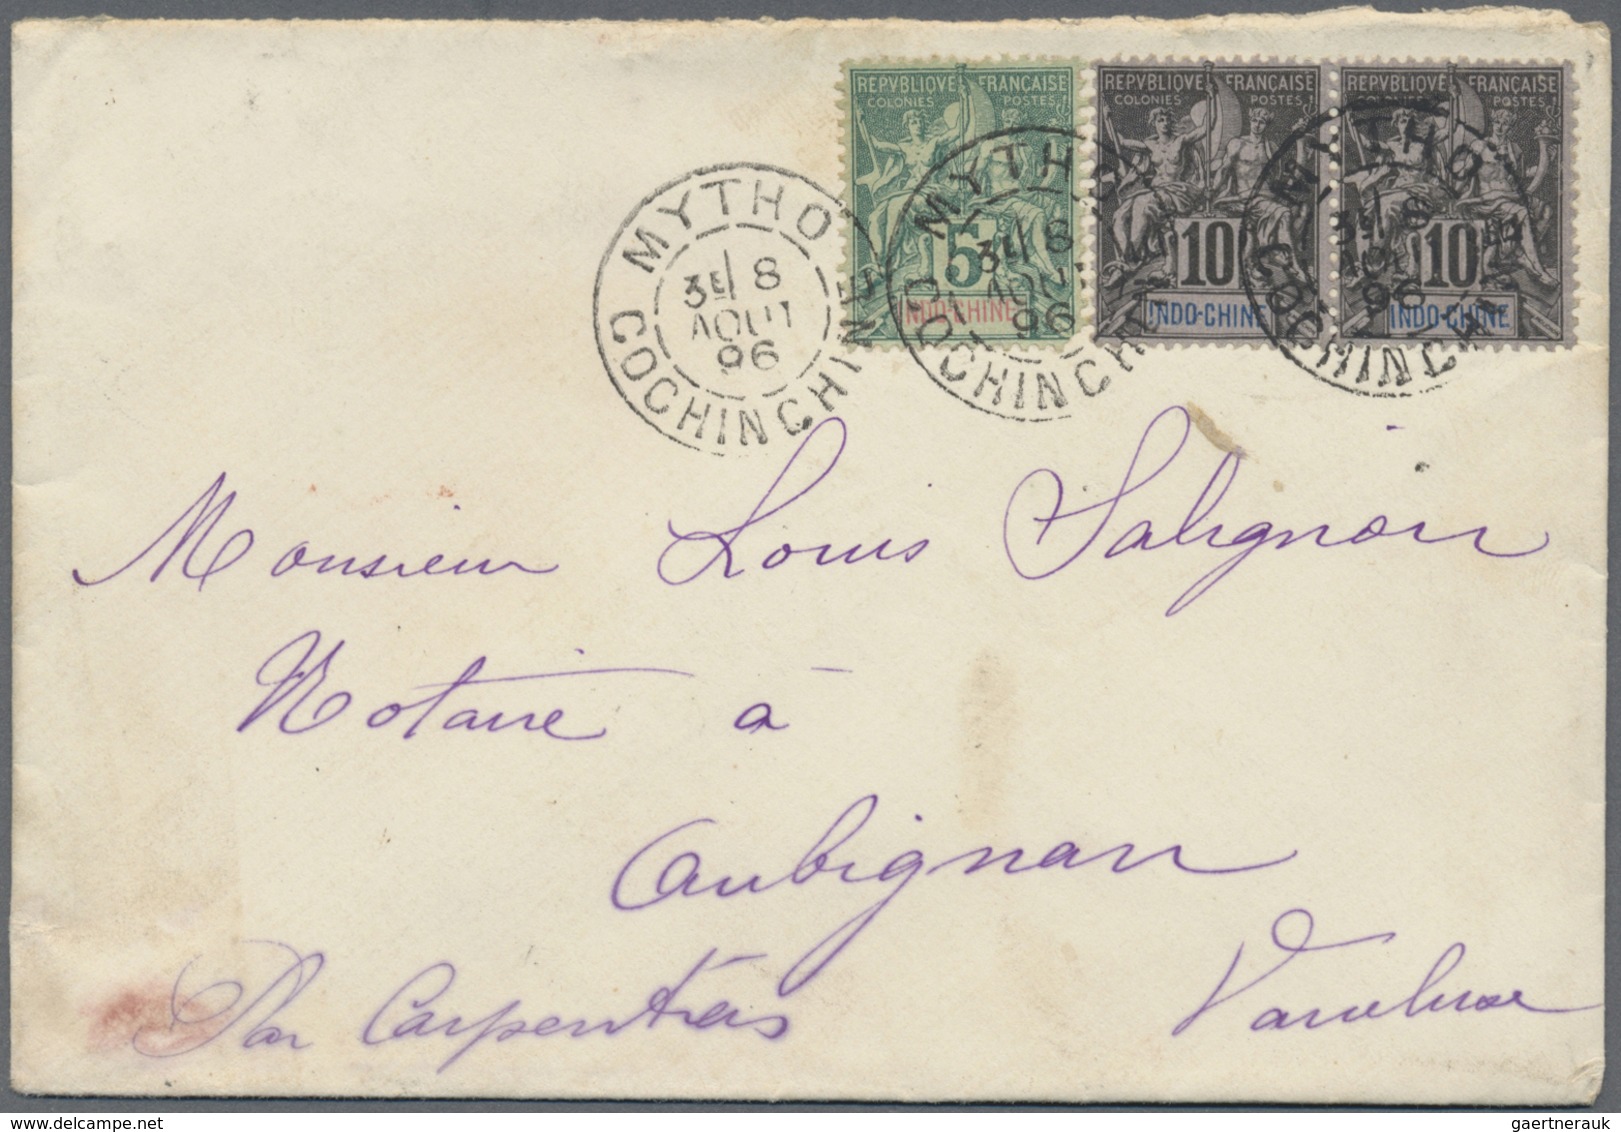 Br Französisch-Indochina: 1890/1901, correspondence  of 28 covers from Cochinchine to Aubignan/Vaucluse